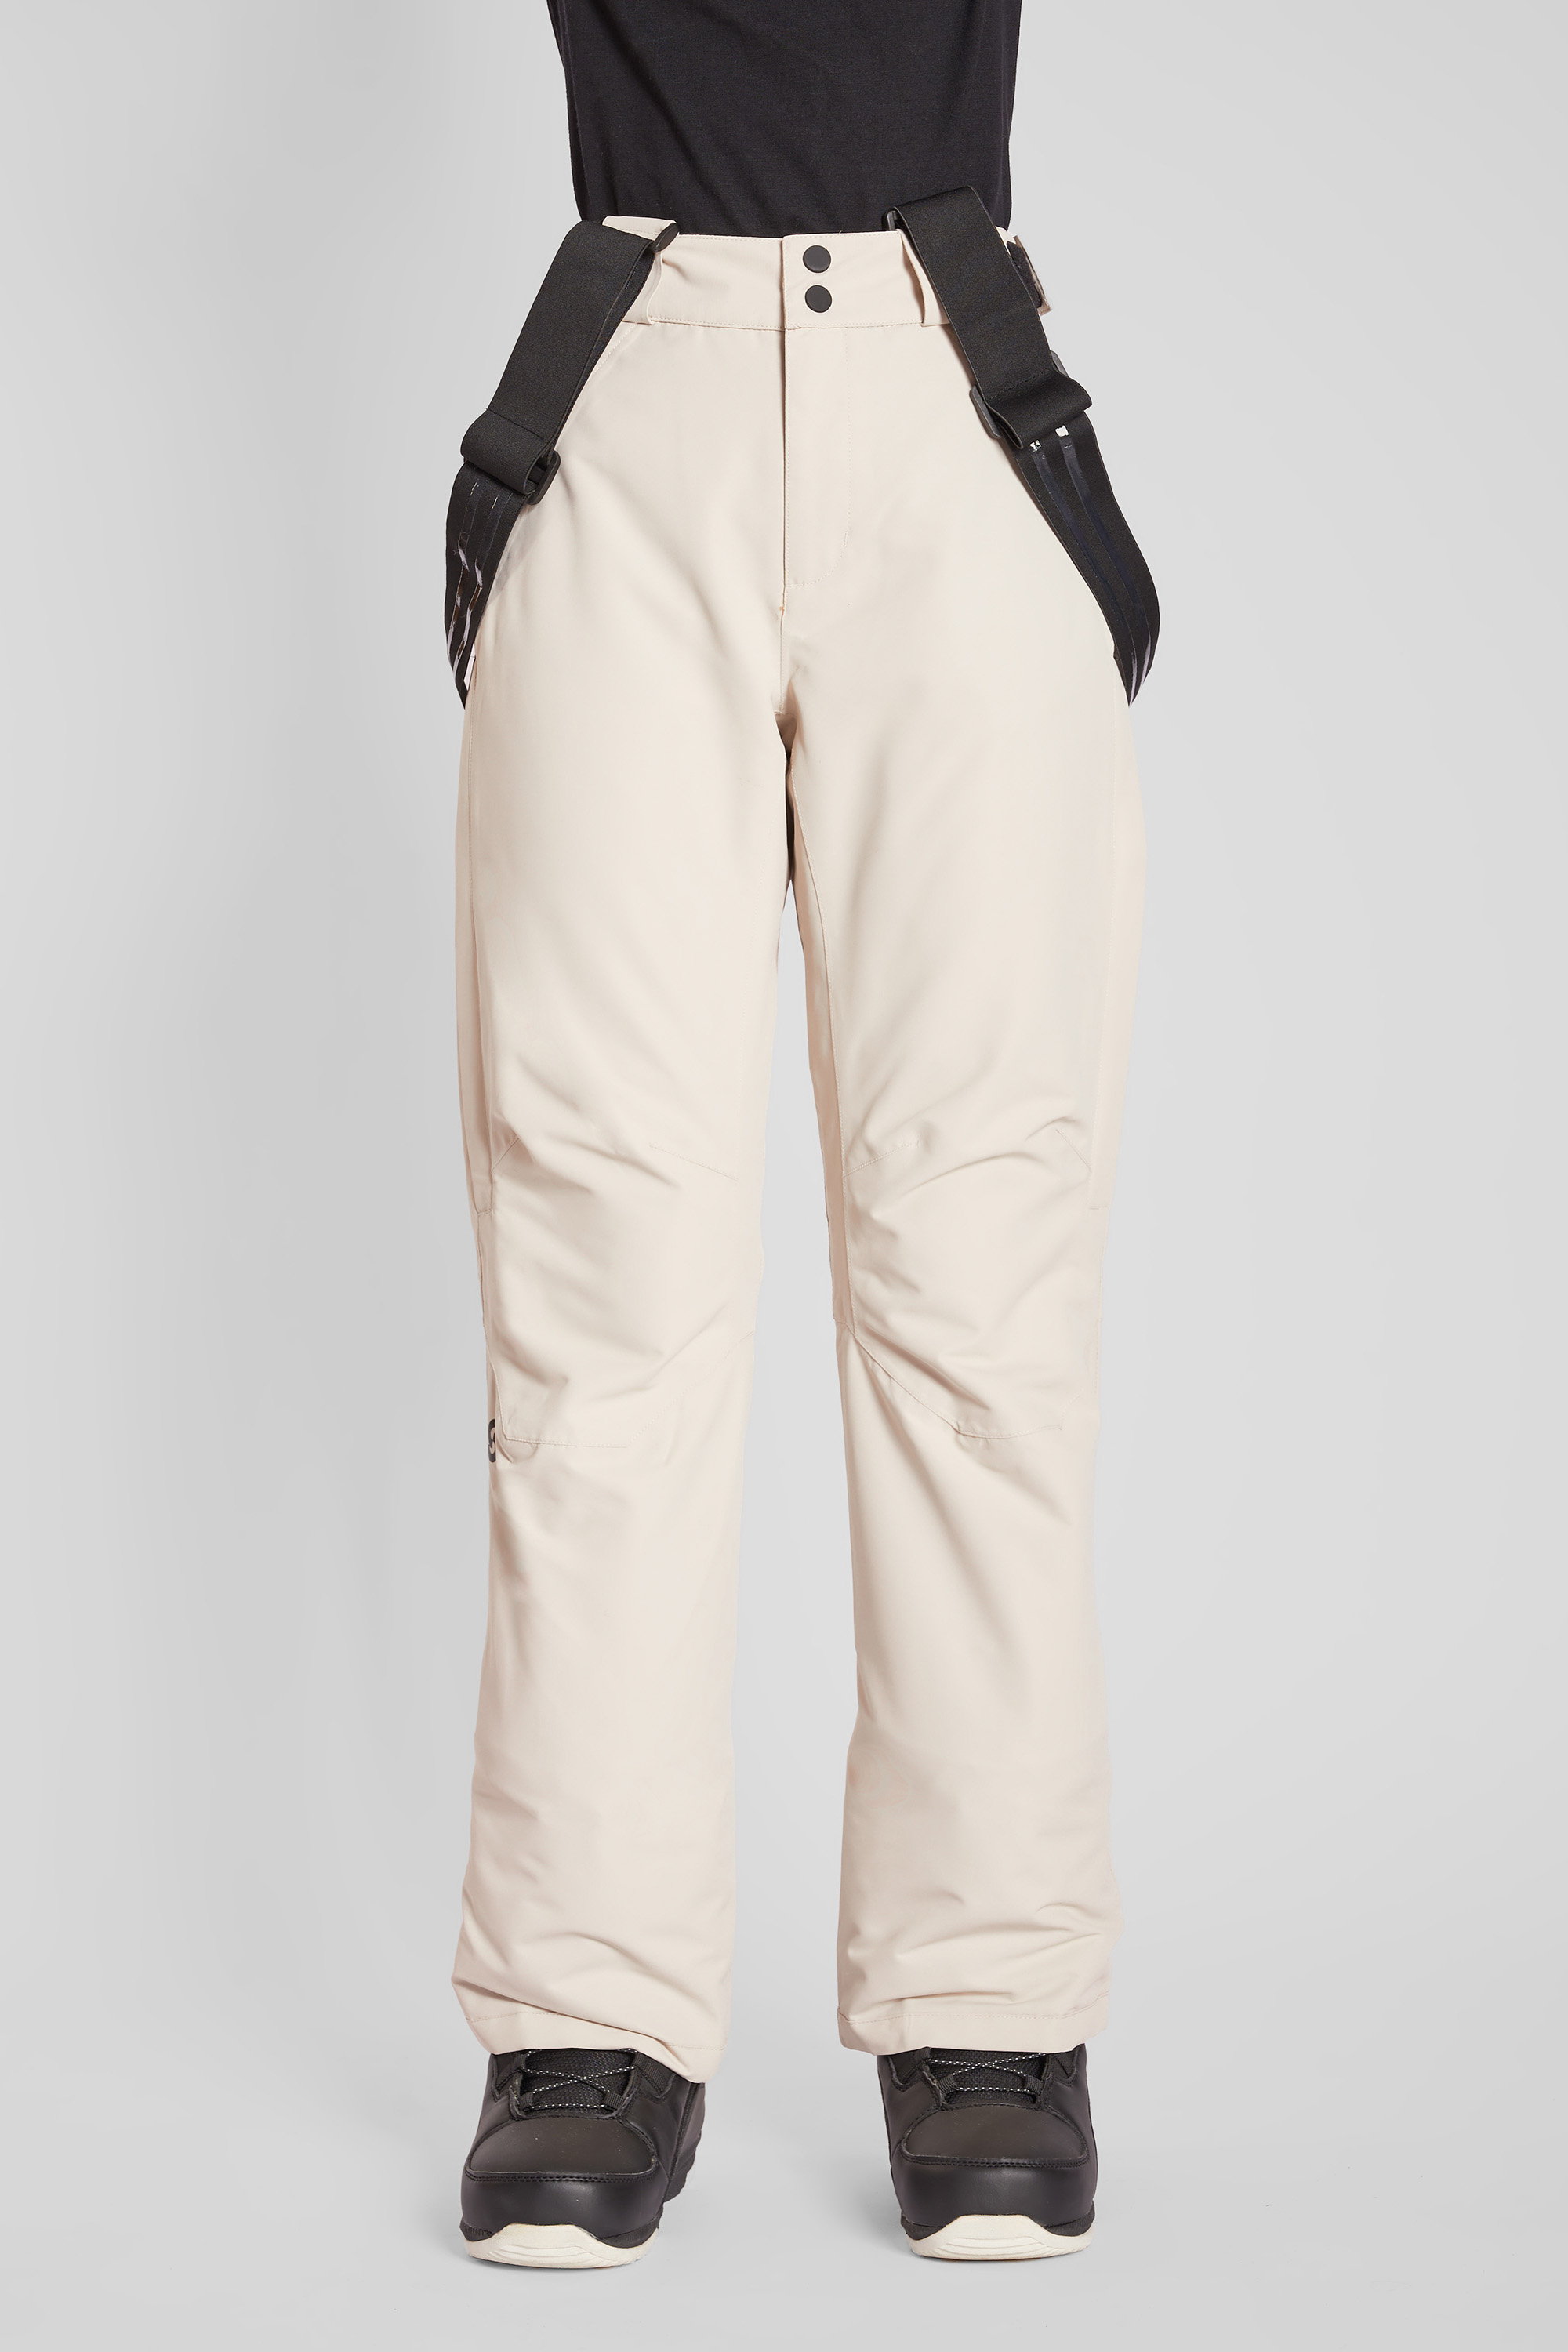 NILS Jan Stretch Ski Pants (size 6 regular, Women's) - clothing